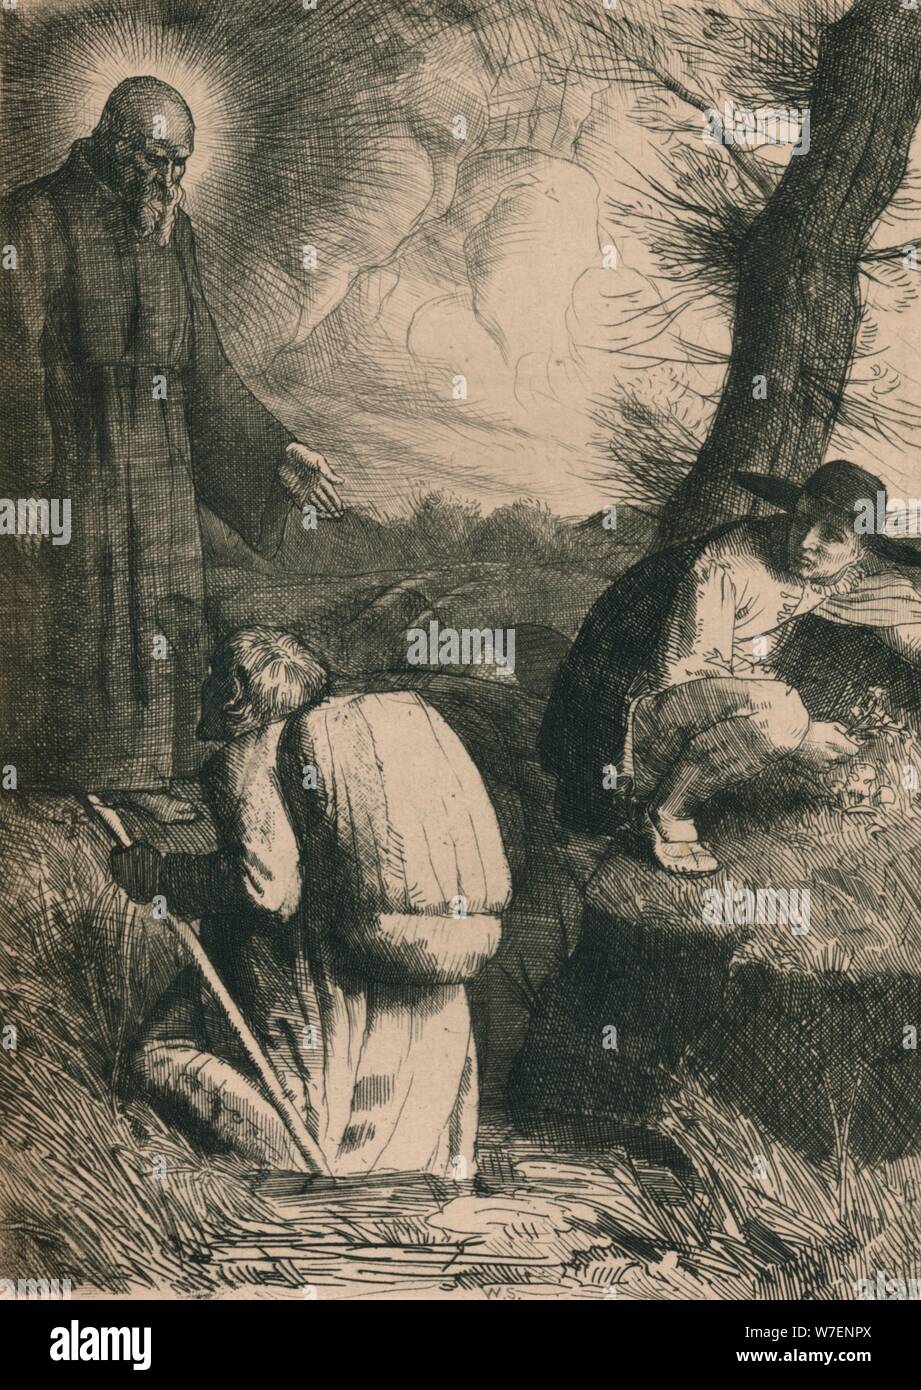 'The Slough of Despond', c1916. Artist: William Strang. Stock Photo